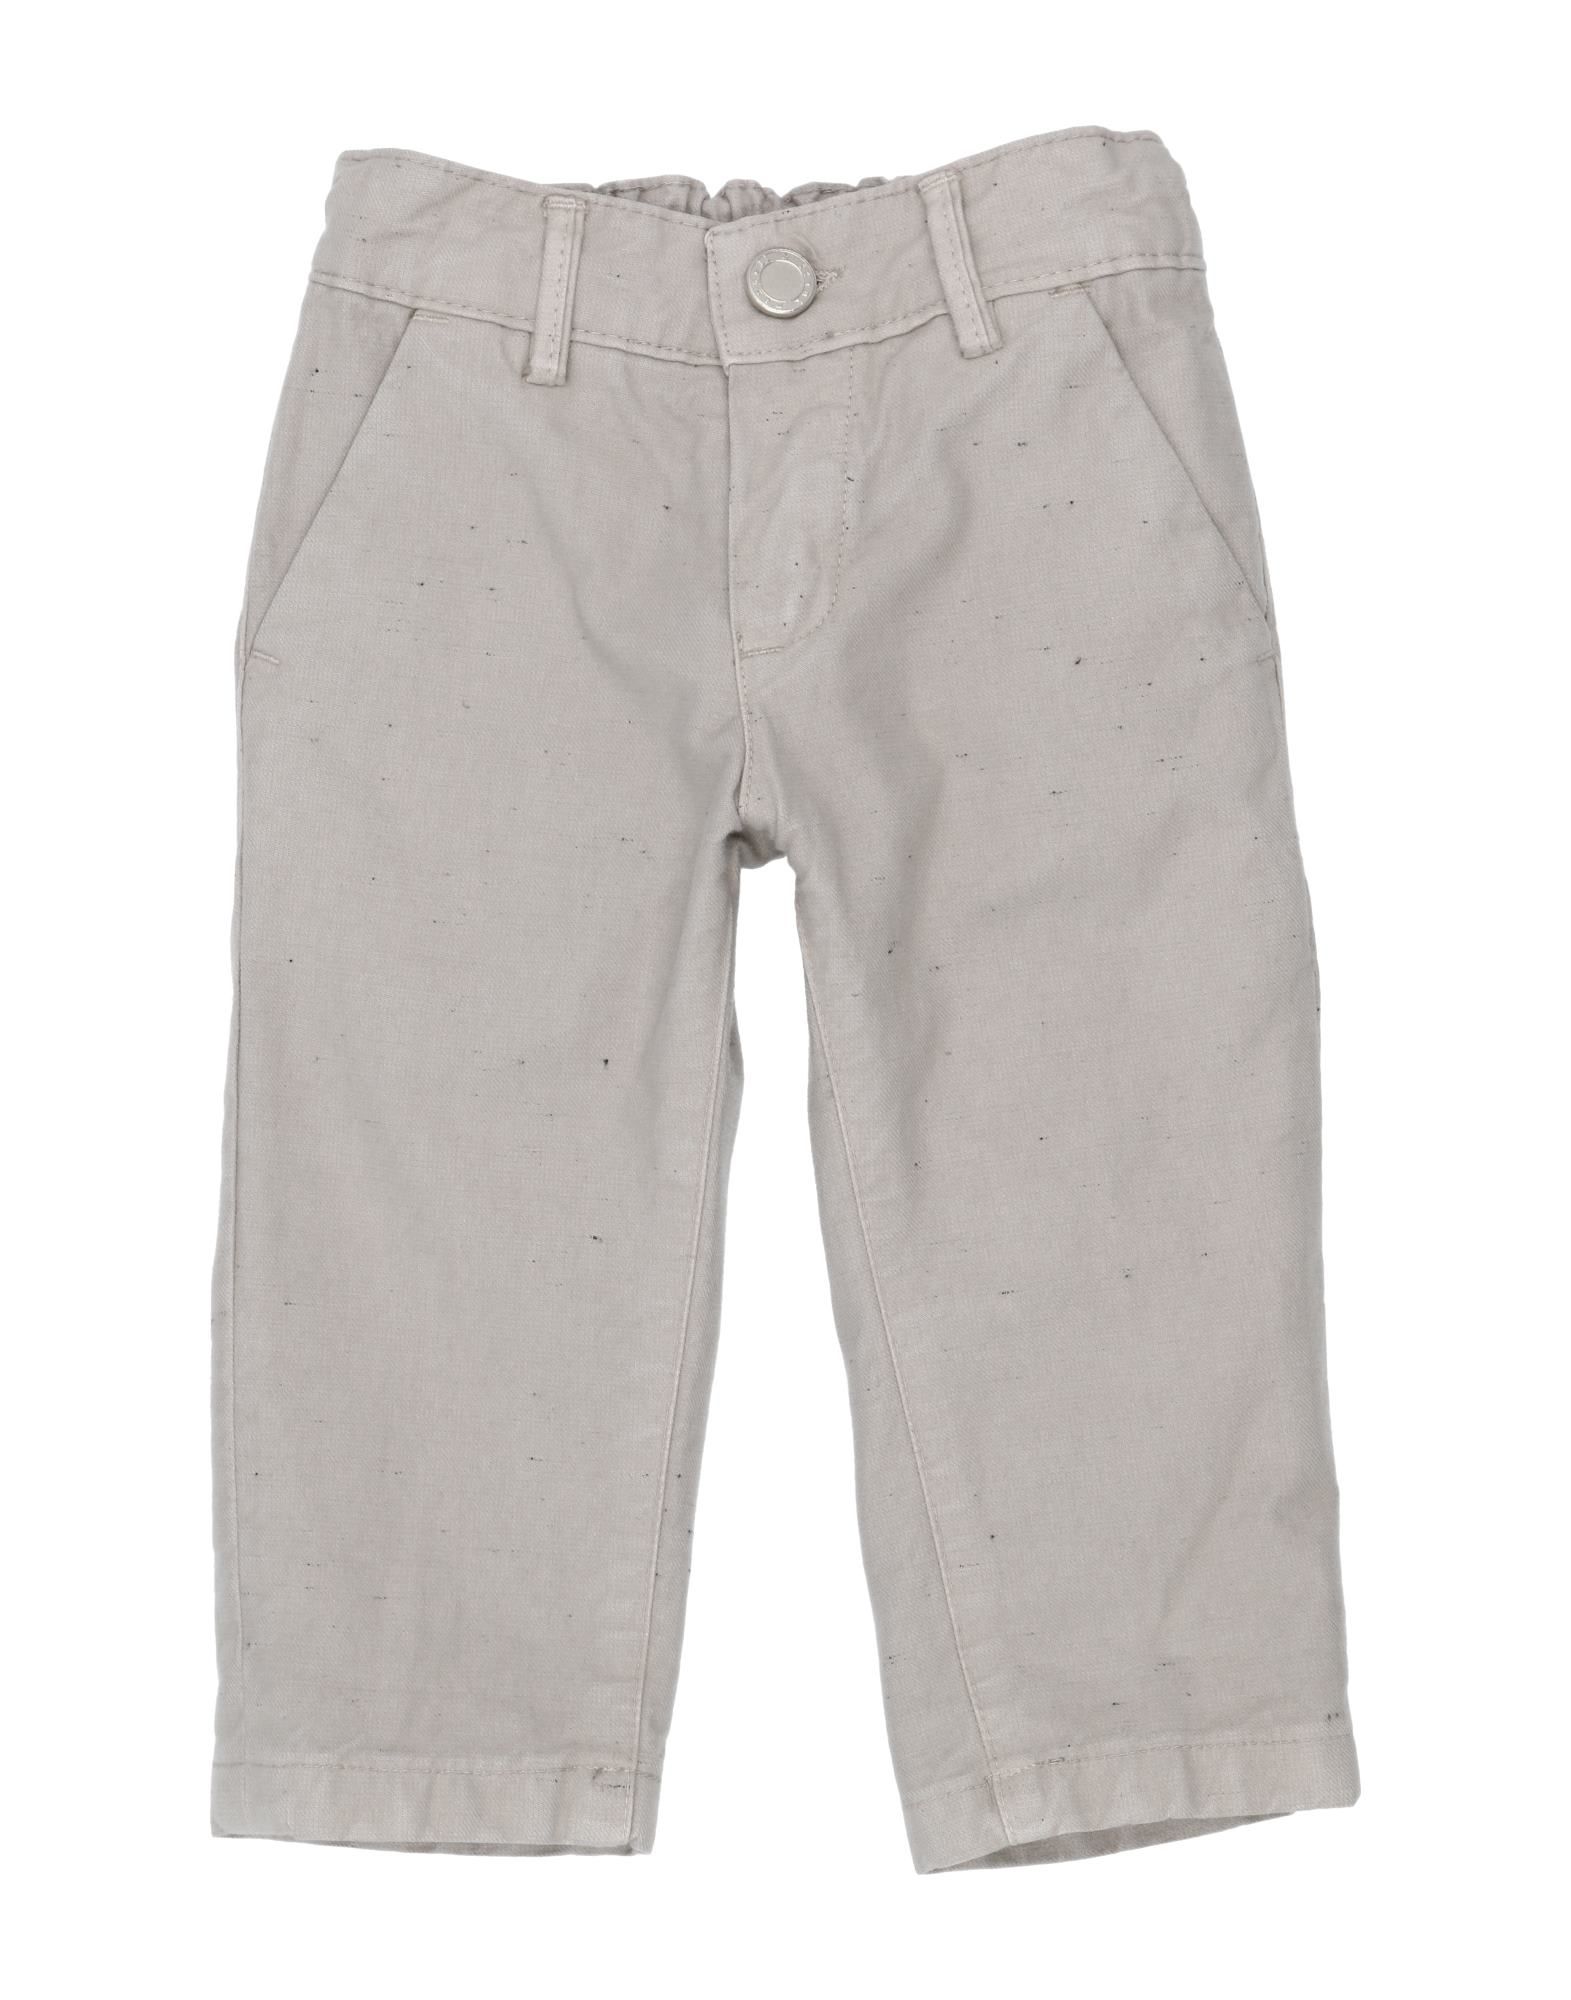 Manuell & Frank Kids' Pants In Light Grey